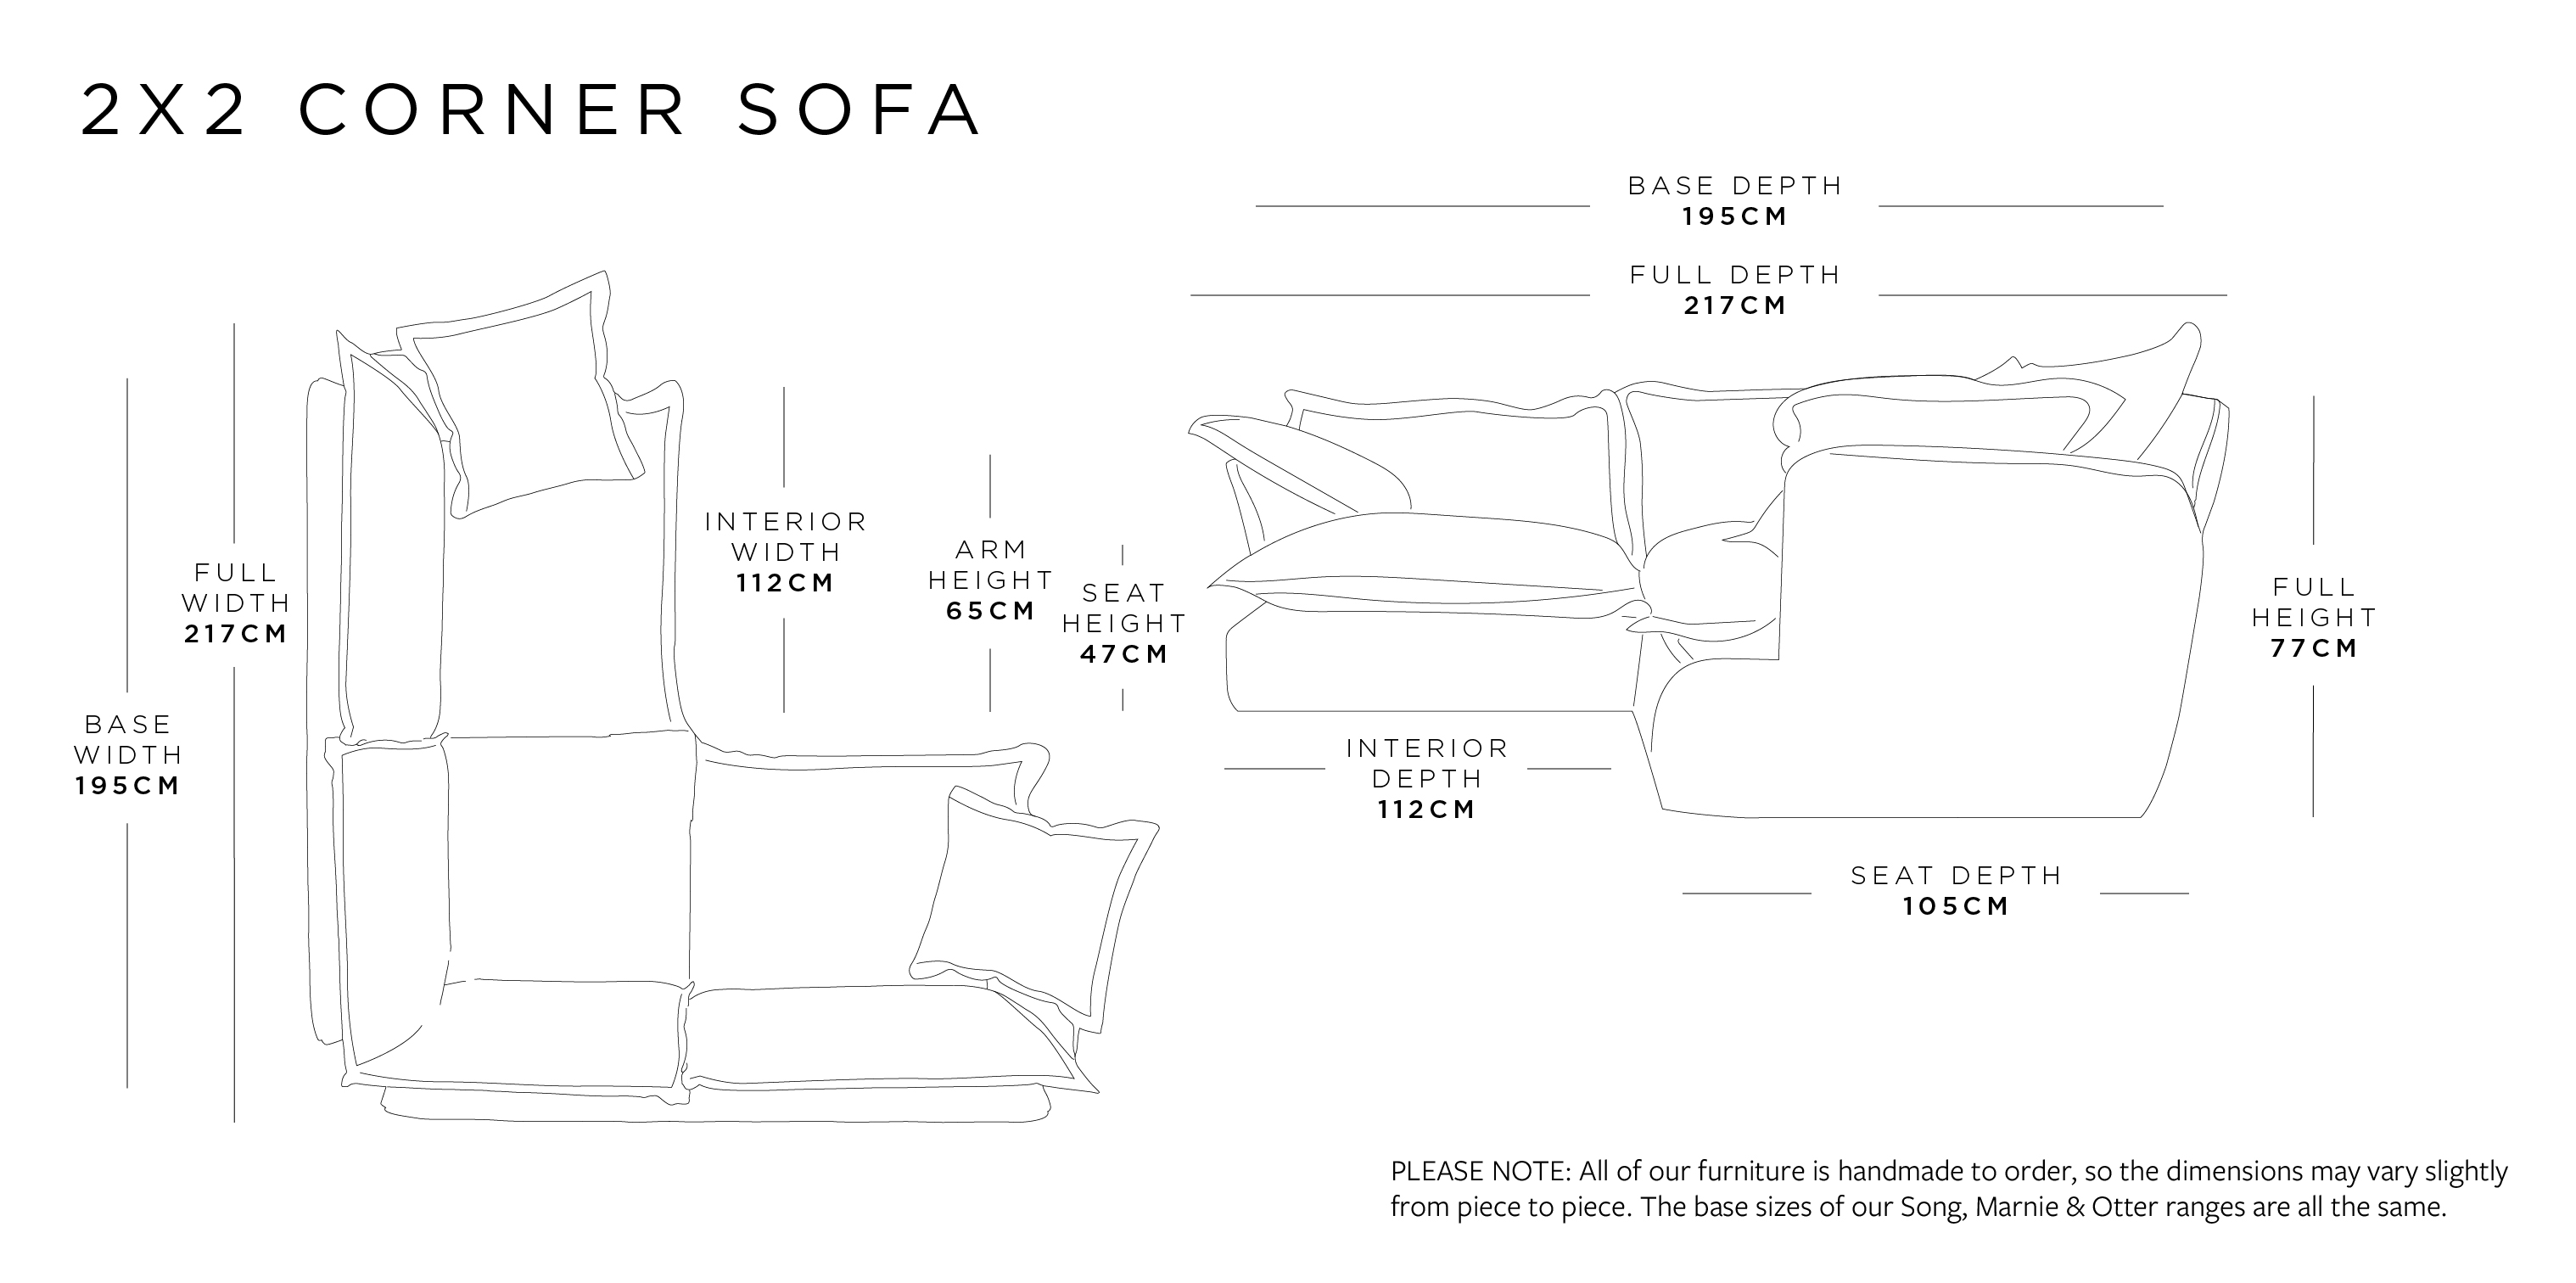 2x2 Corner Sofa | Marnie Range Size Guide